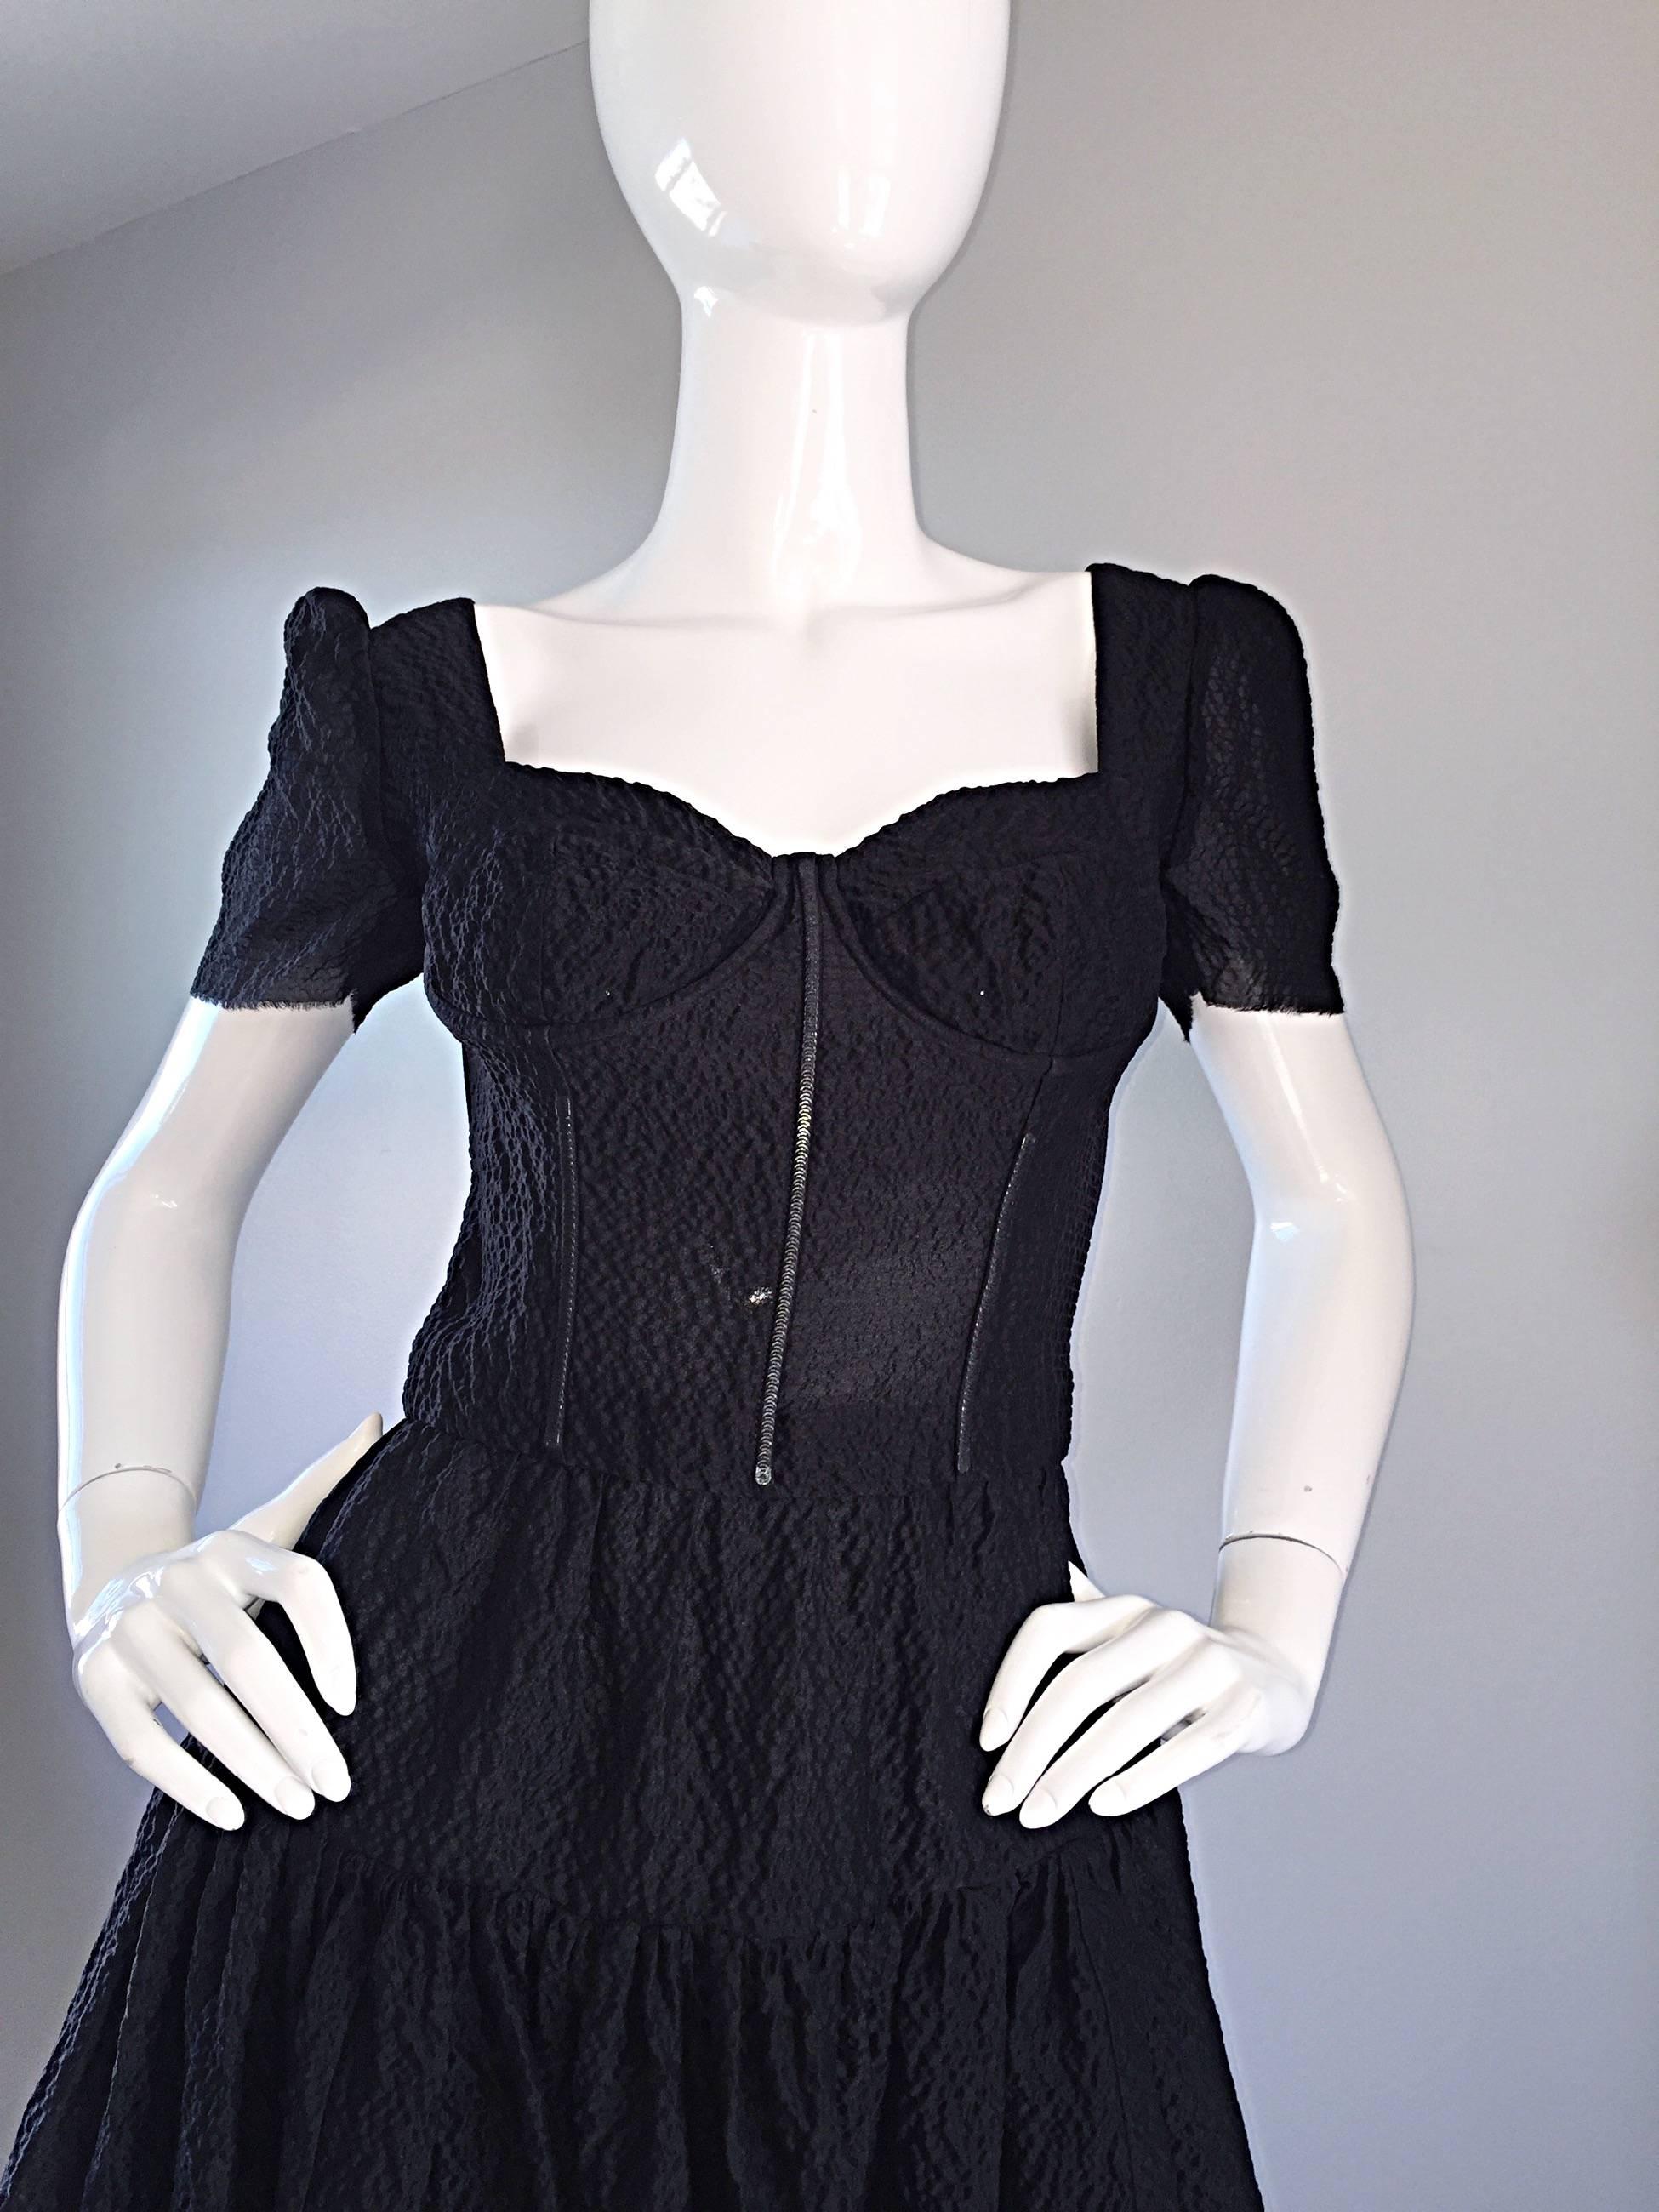 Stunning Dolce & Gabbana Black Silk Sequin Bustier Dress From Spanish Collection 1